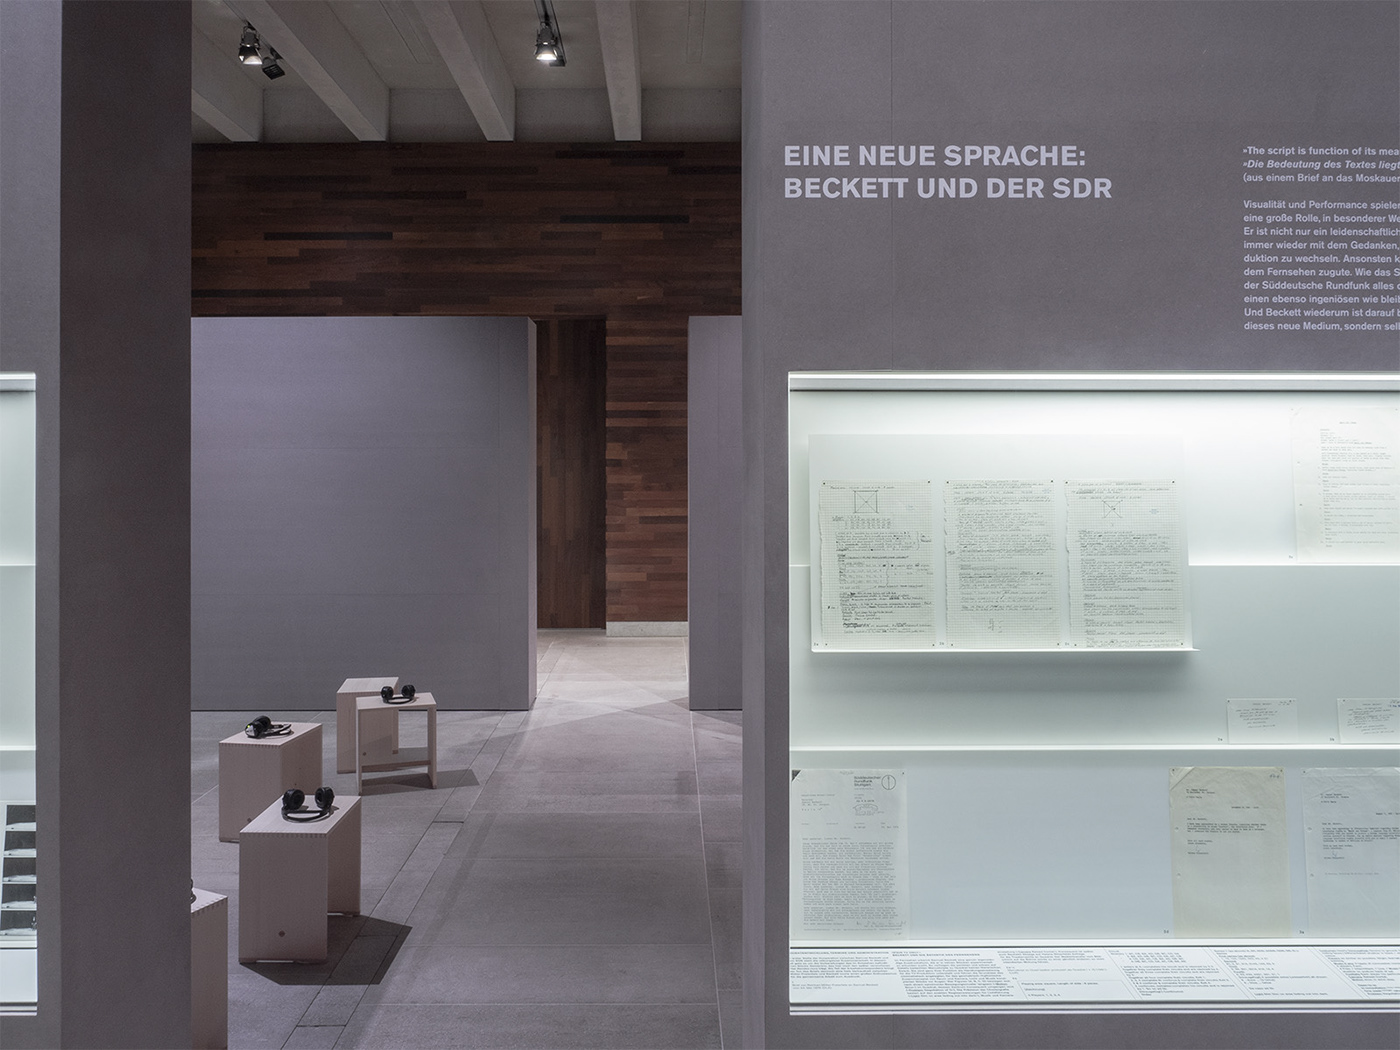 Literaturmuseum der Moderne Marbach südstudio CLMNZ beckett